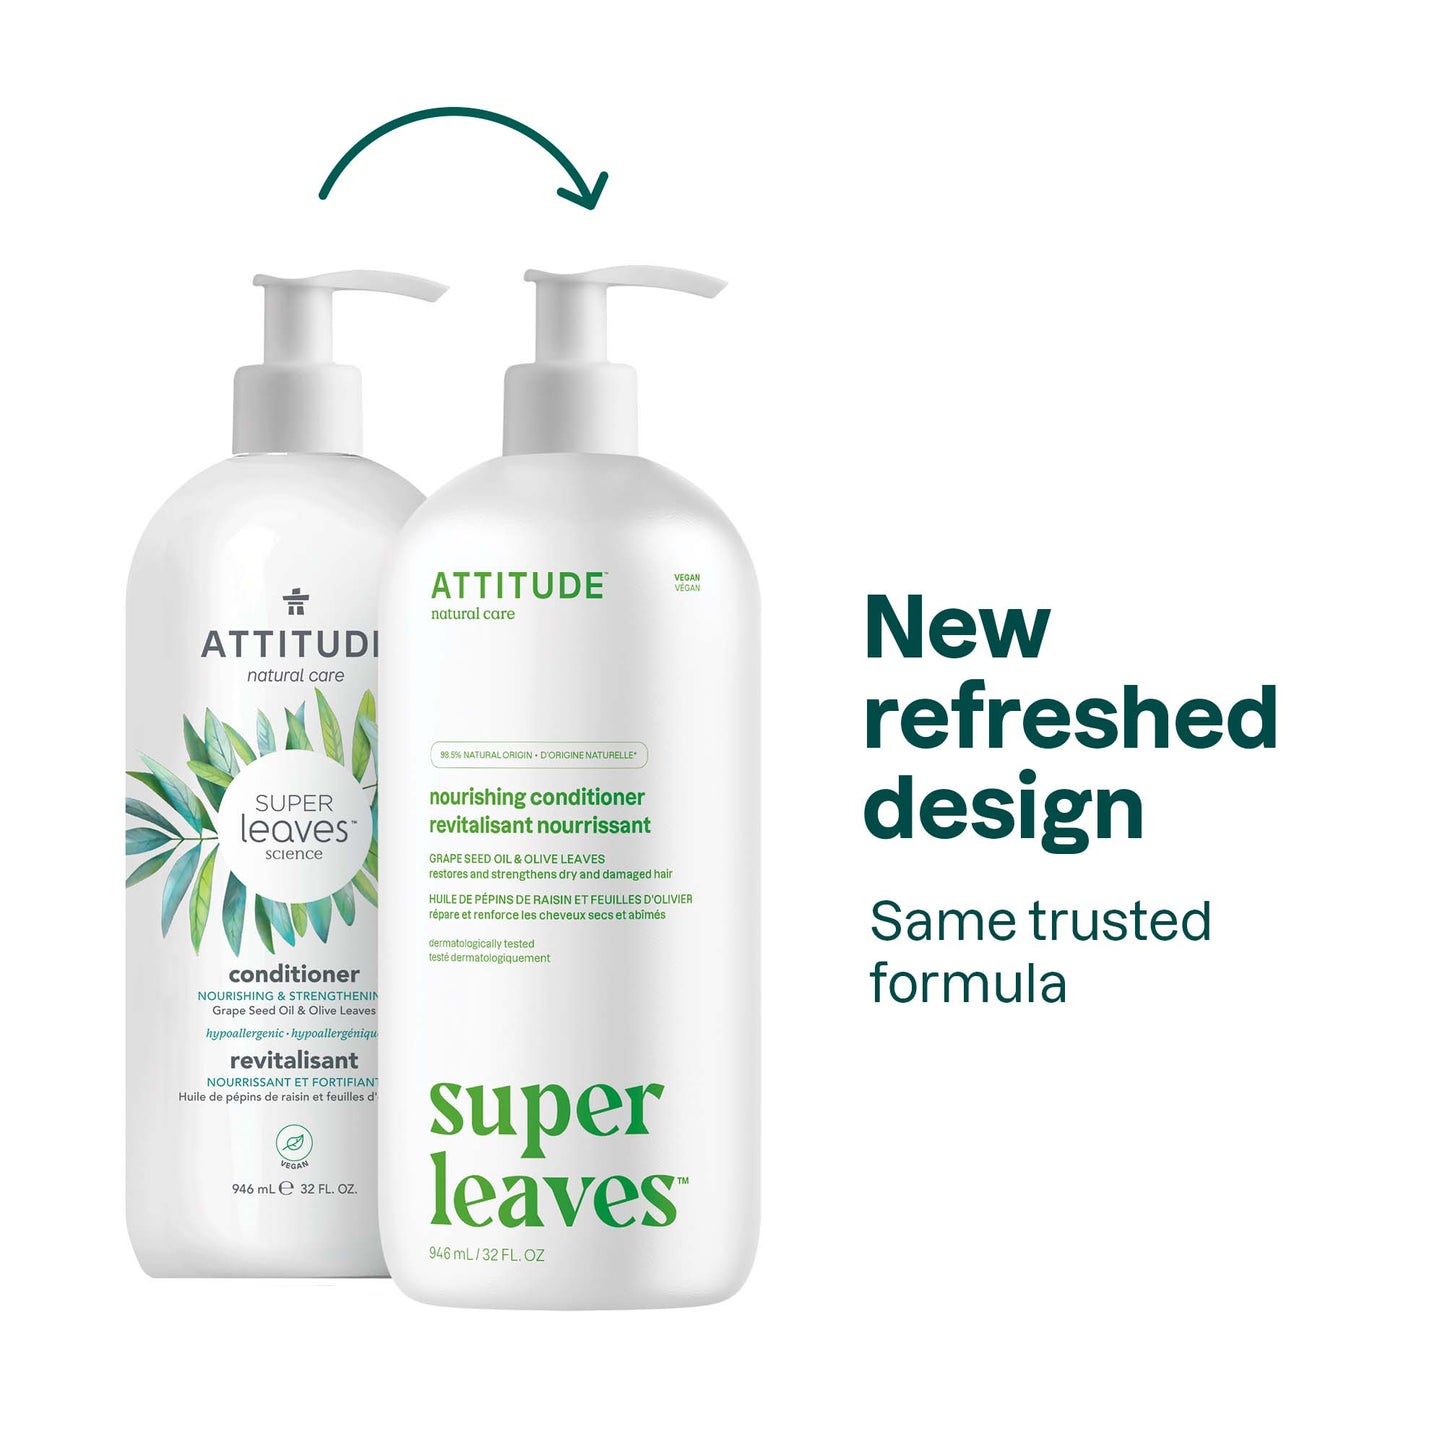 ATTITUDE Super Leaves Conditioner Nourishing & Strengthening : Super leaves™ : Restores and strengthens dry and damaged hair 11513_en? 32 FL. OZ.